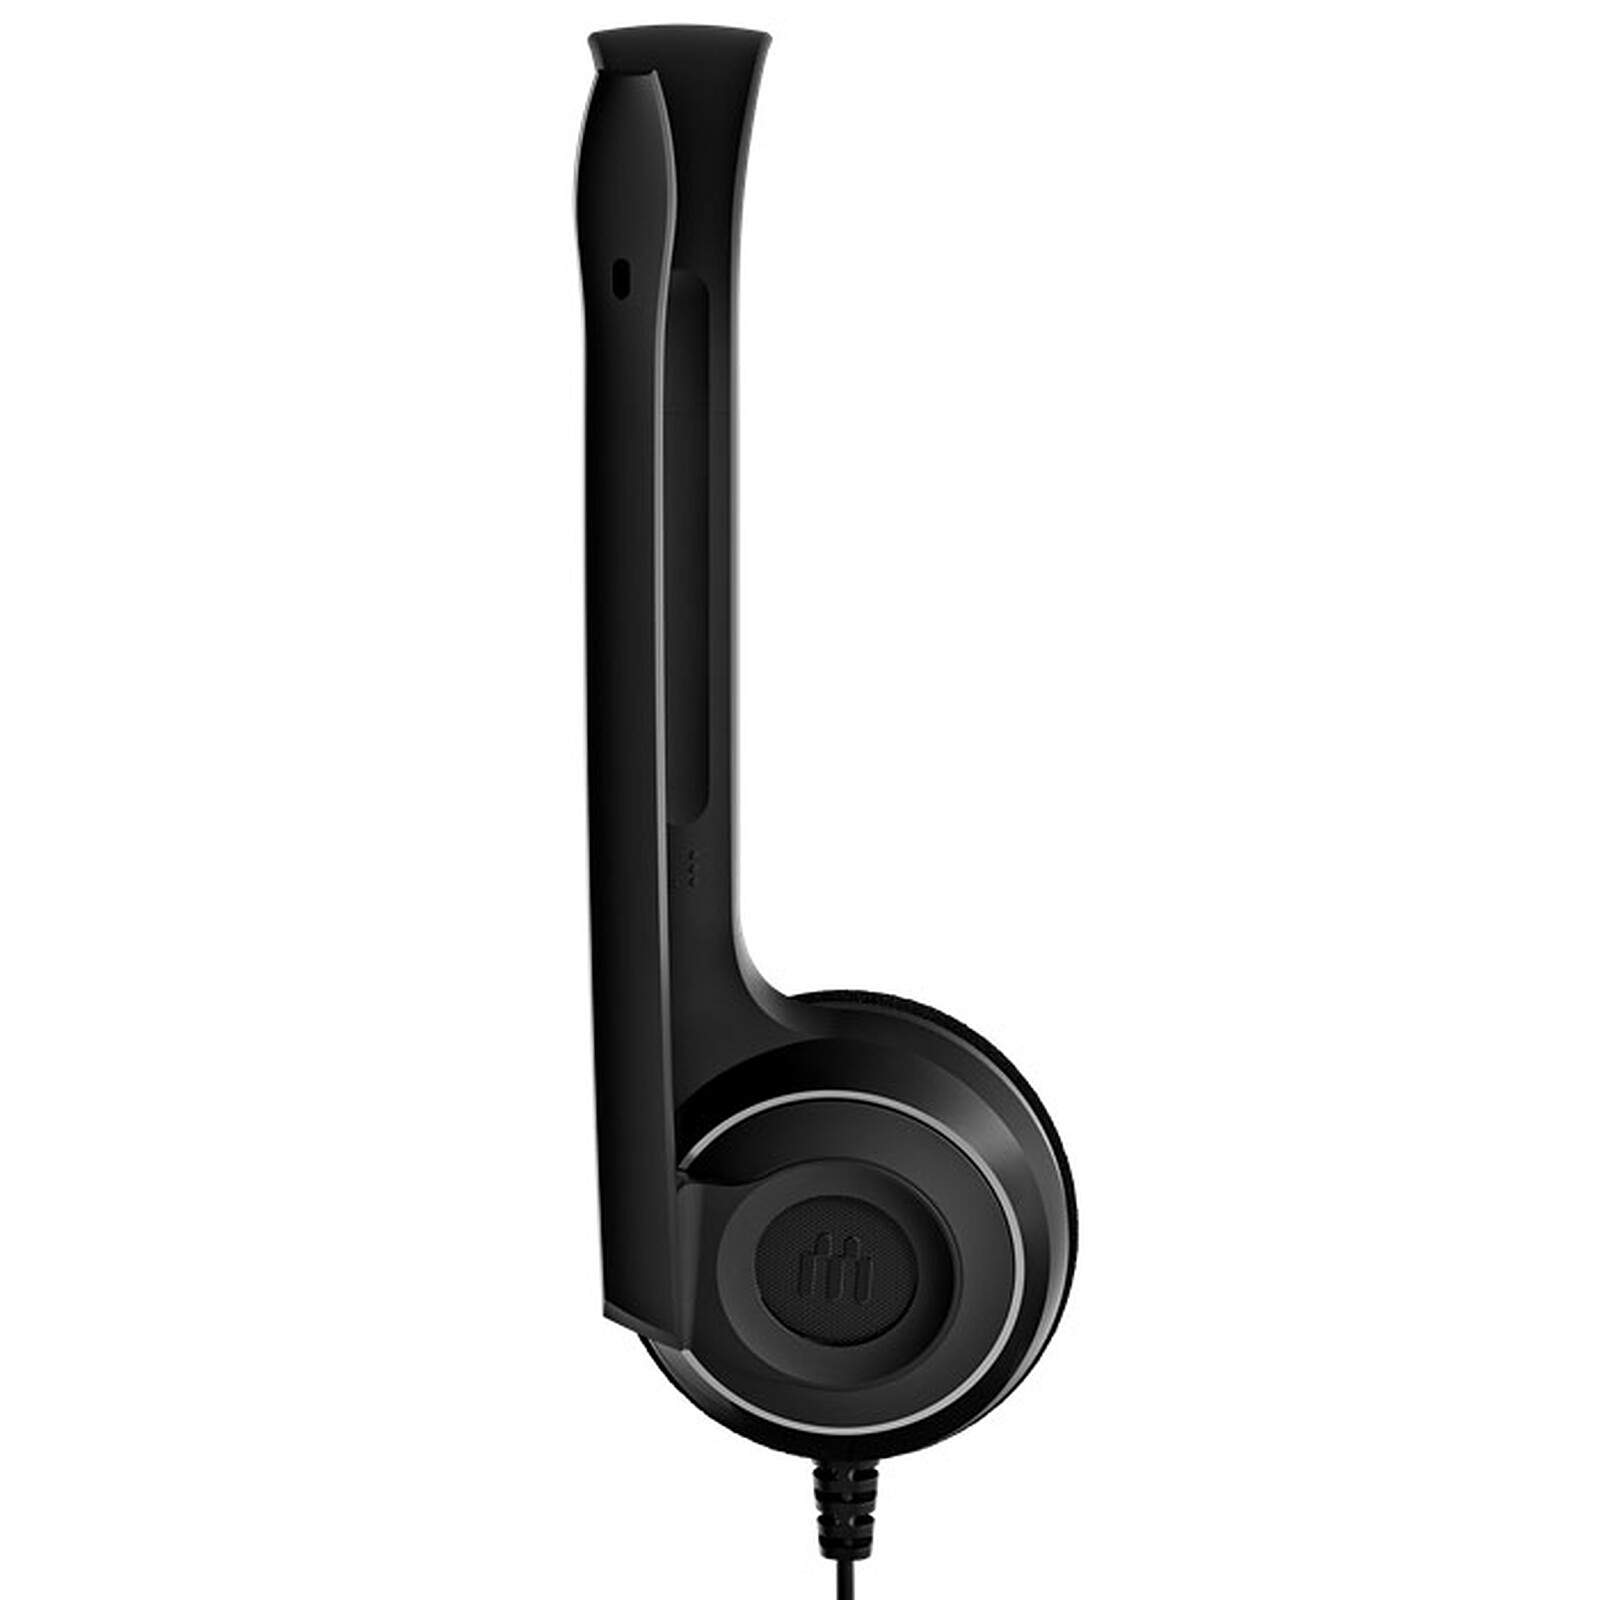 Microsoft Modern USB-A Headset - Cuffie con microfono - Garanzia 3 anni  LDLC